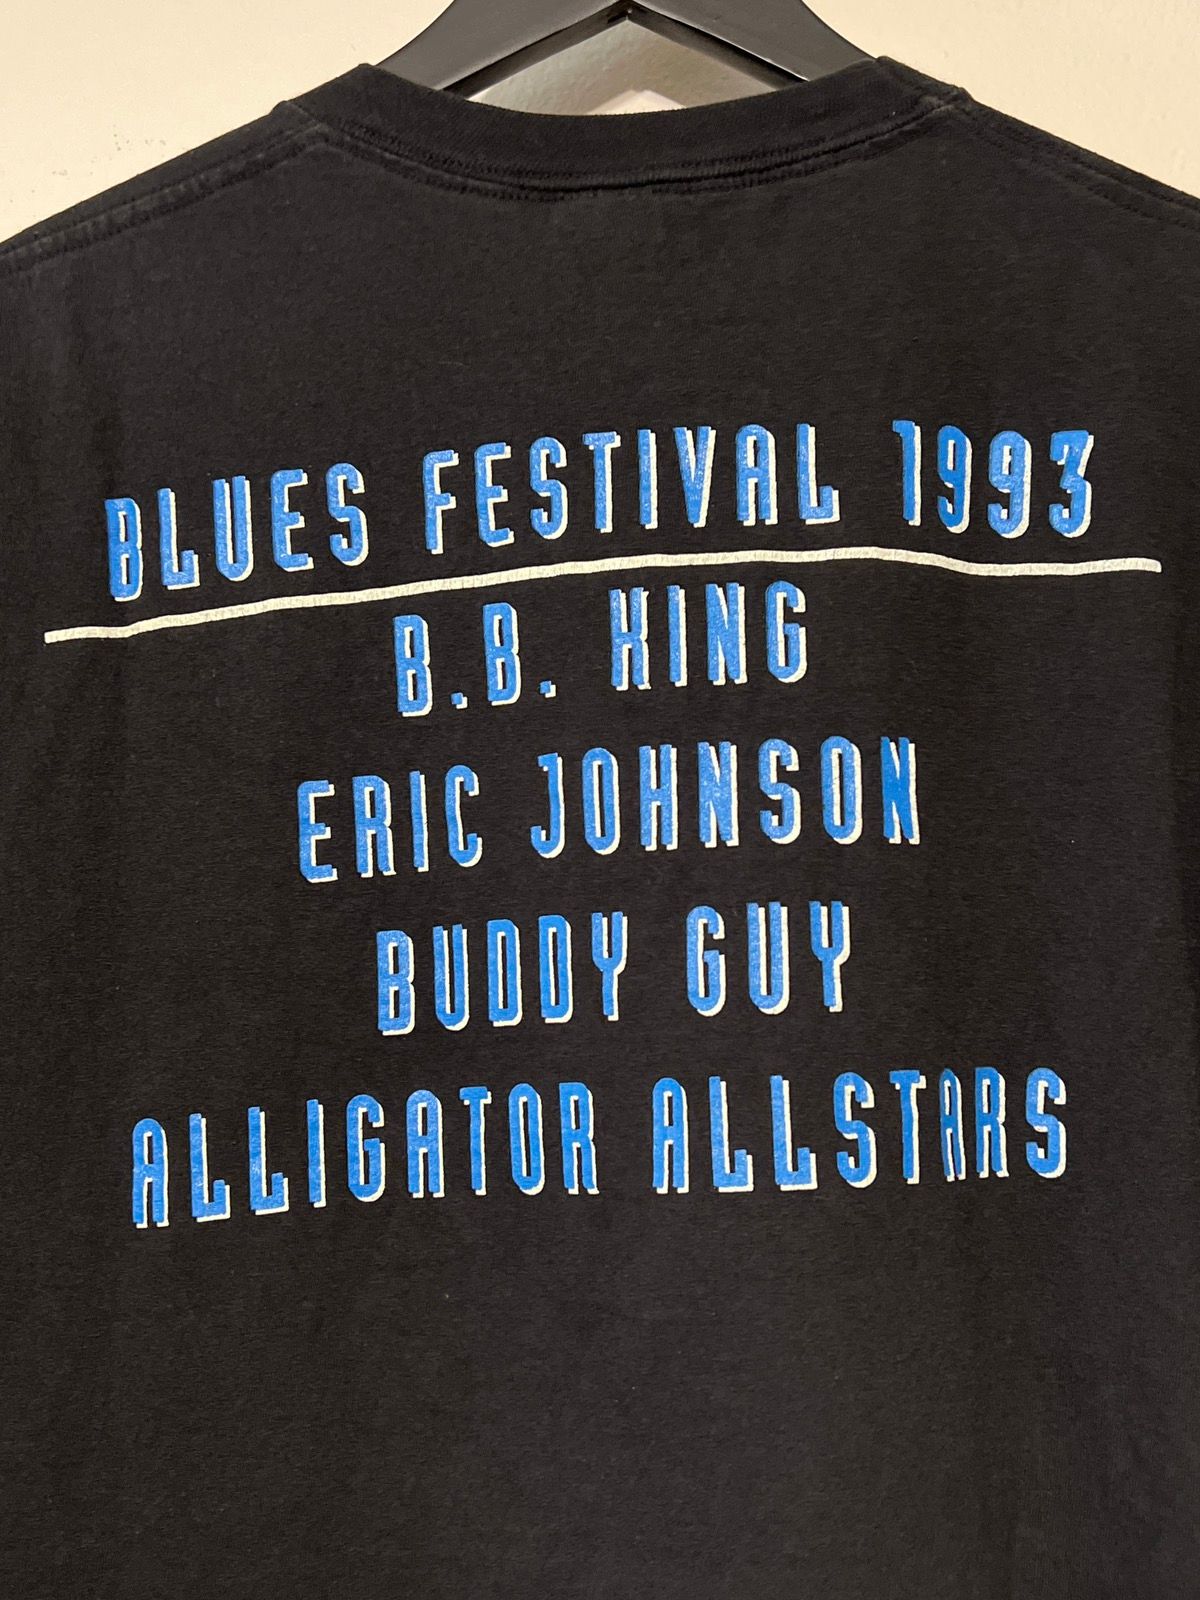 Vintage Vintage BB King Blues Festival 1993 T Shirt Size XL Size US XL / EU 56 / 4 - 11 Thumbnail